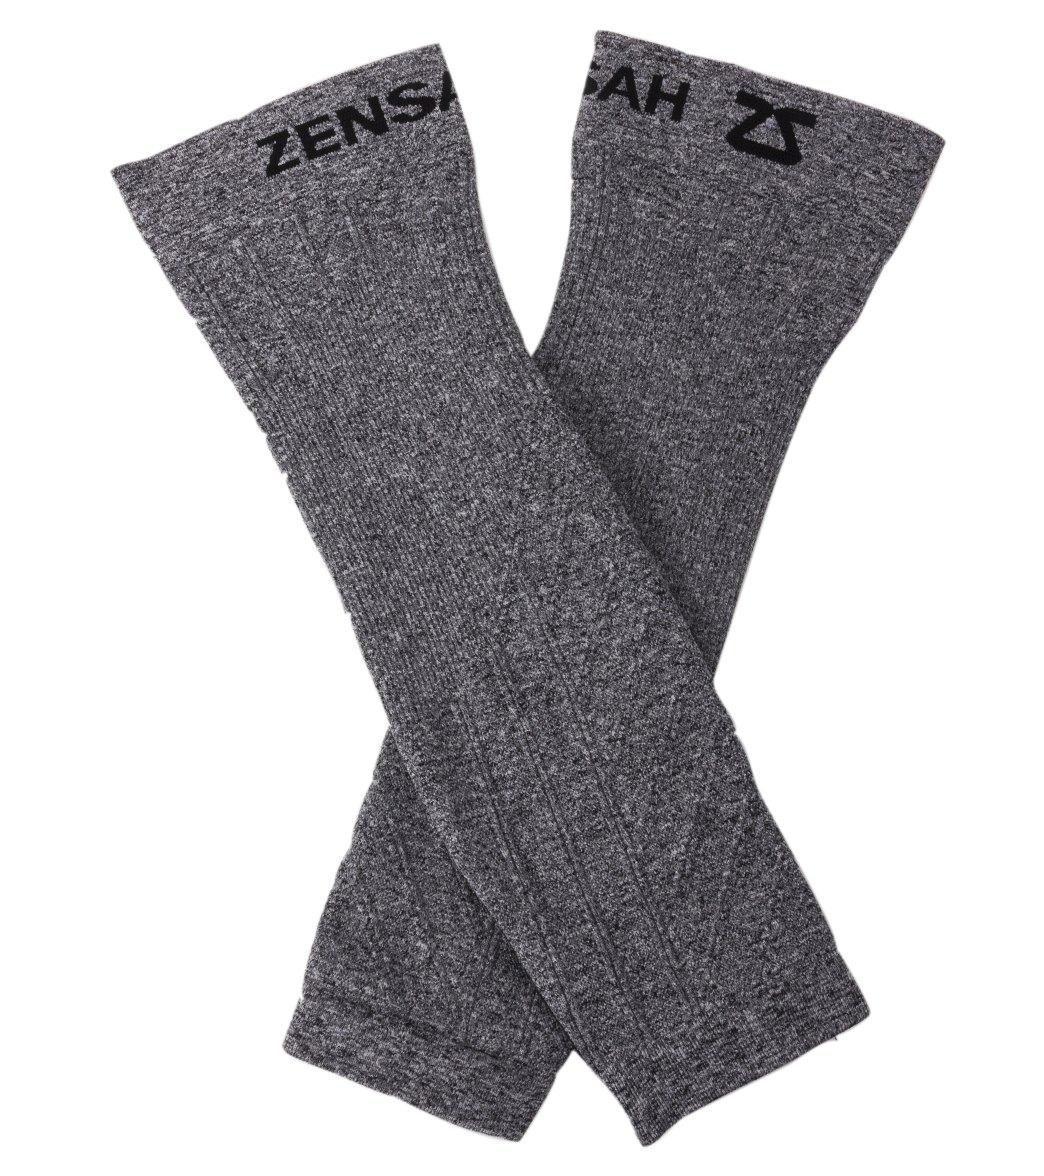 Zensah Compression Leg Sleeves Pair - Heather Grey Large/Xl - Swimoutlet.com